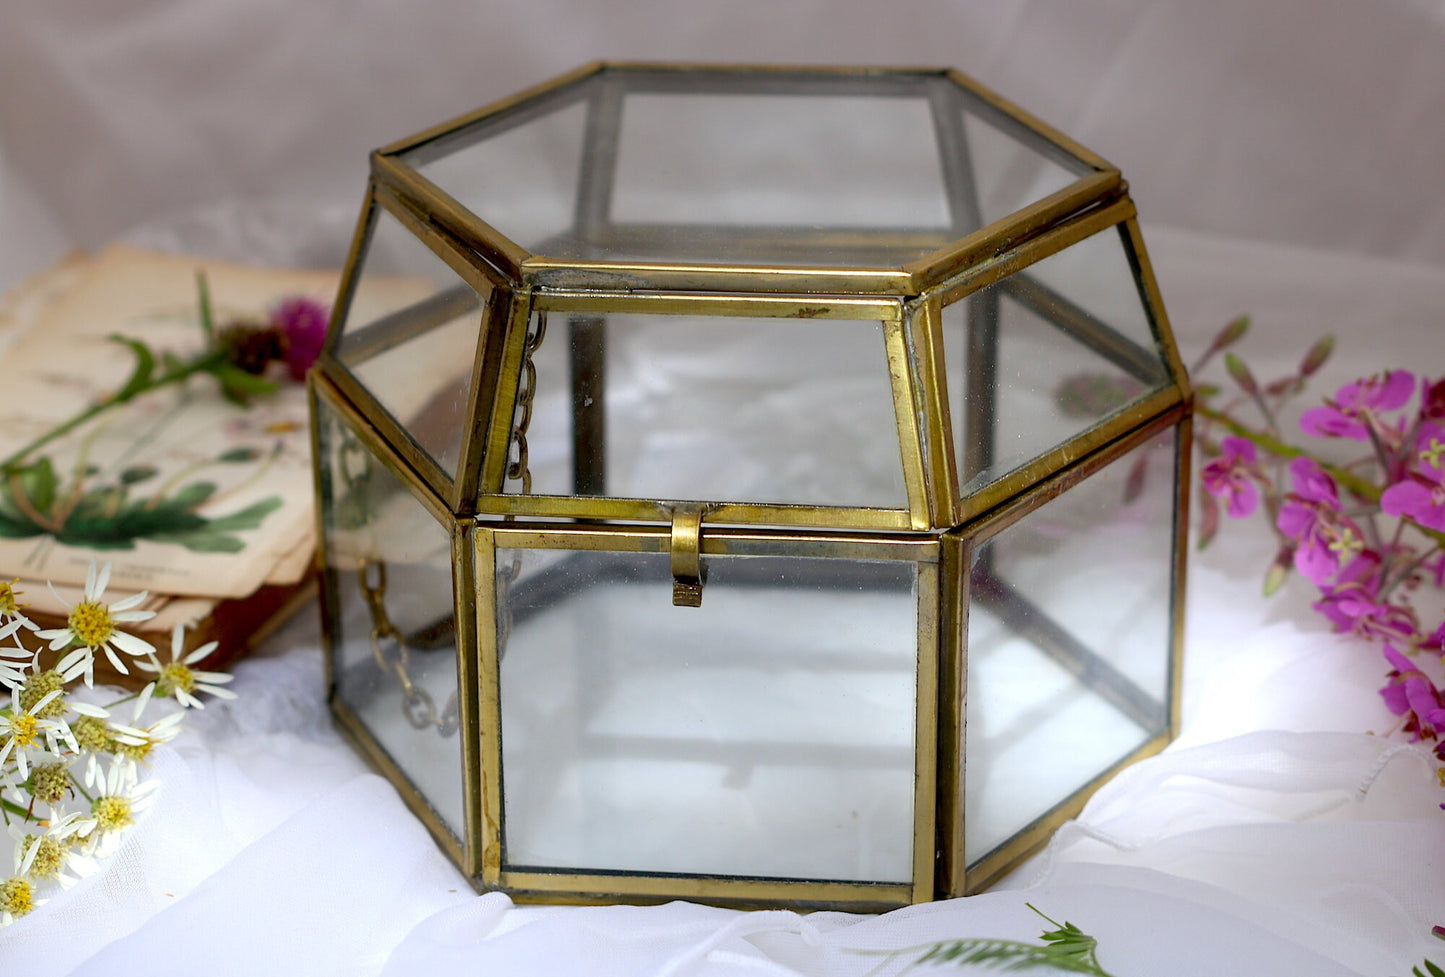 Glass Display Box | DIY Craft Supplies | Empty Glass Geometric Terrarium for Reception, Keepsake, Plant, Wedding, Card | Hexagon Storage